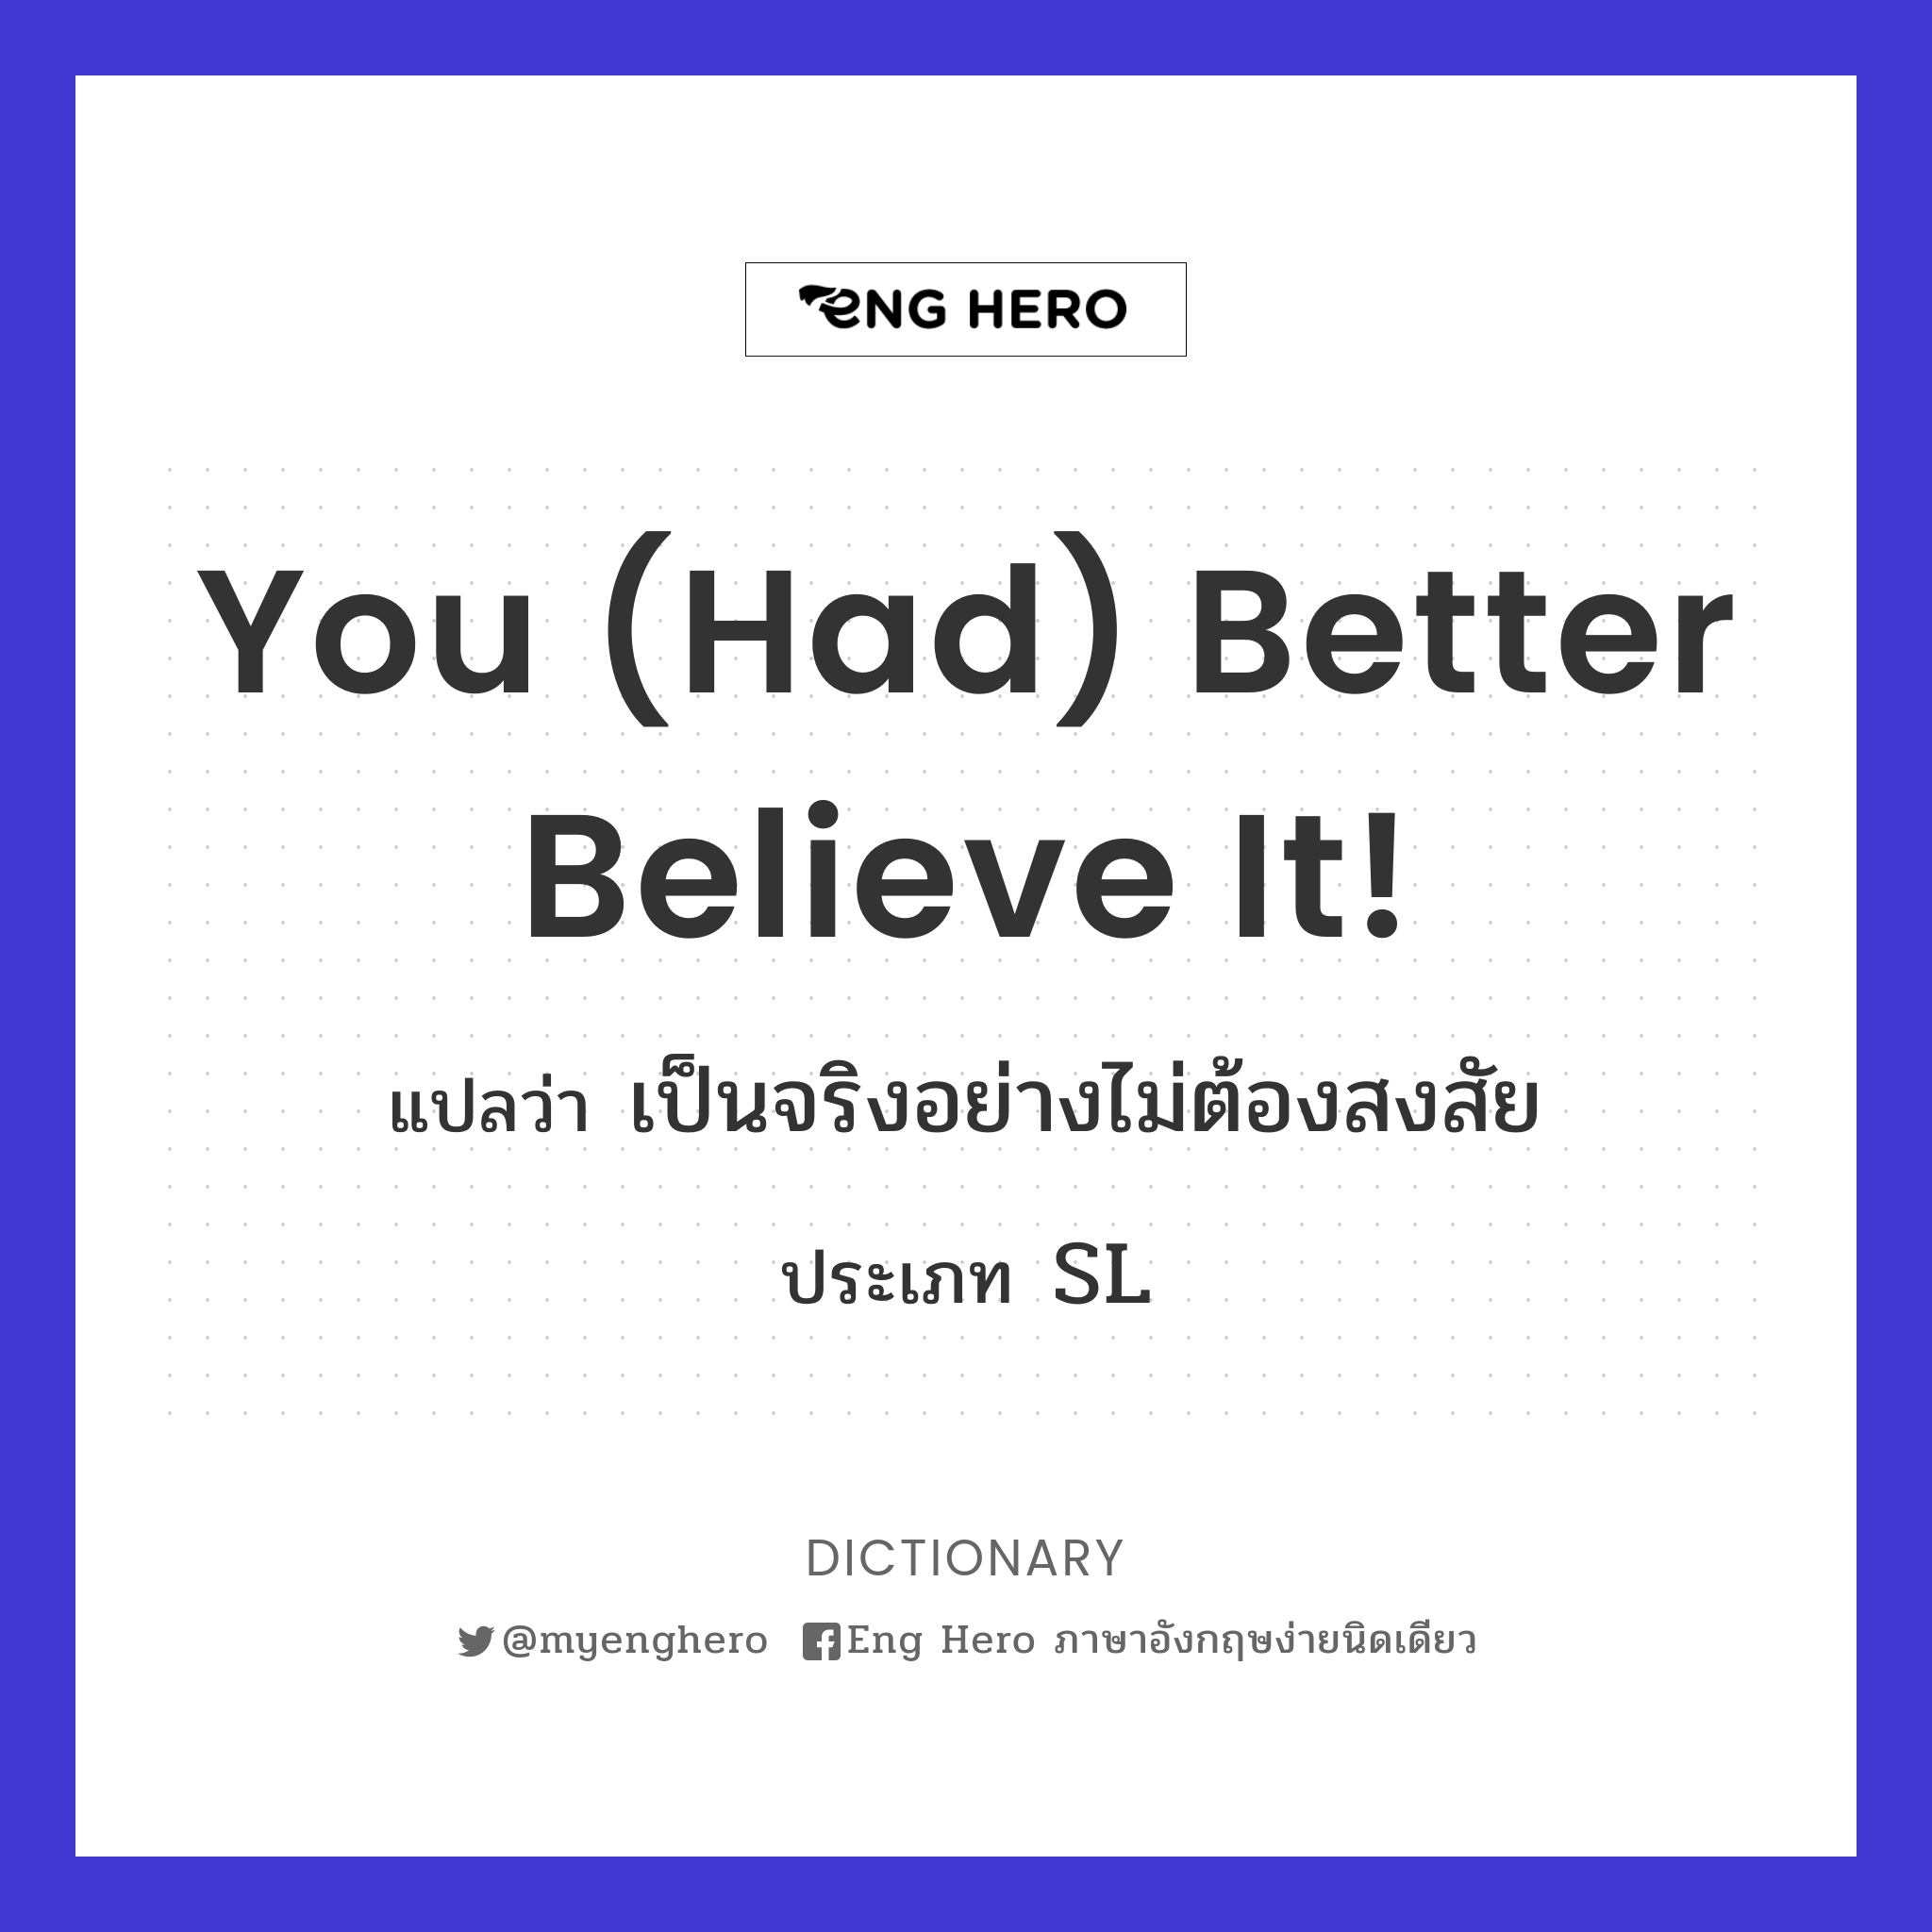 You (had) better believe it!